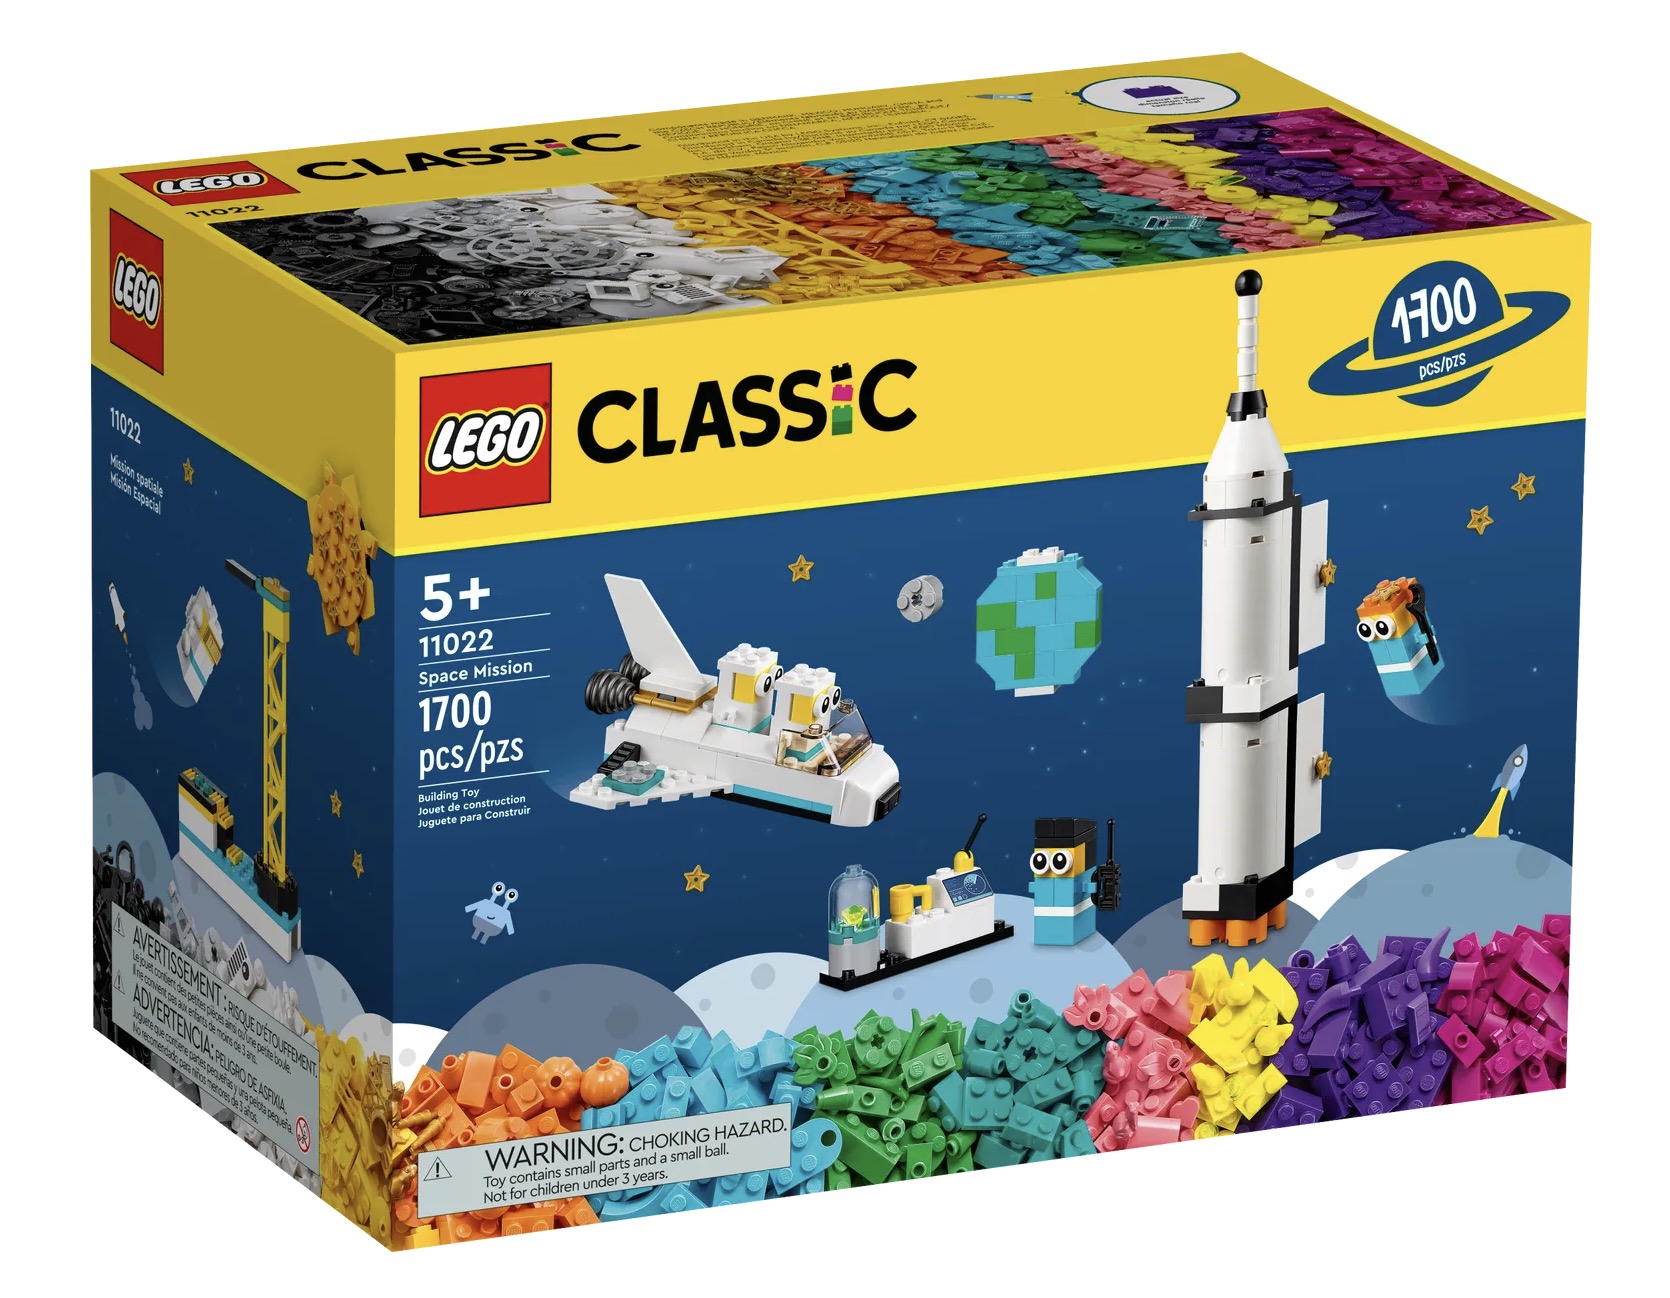 Lego Classic Space Mission 11022 Costco In-Store $49.99 YMMV